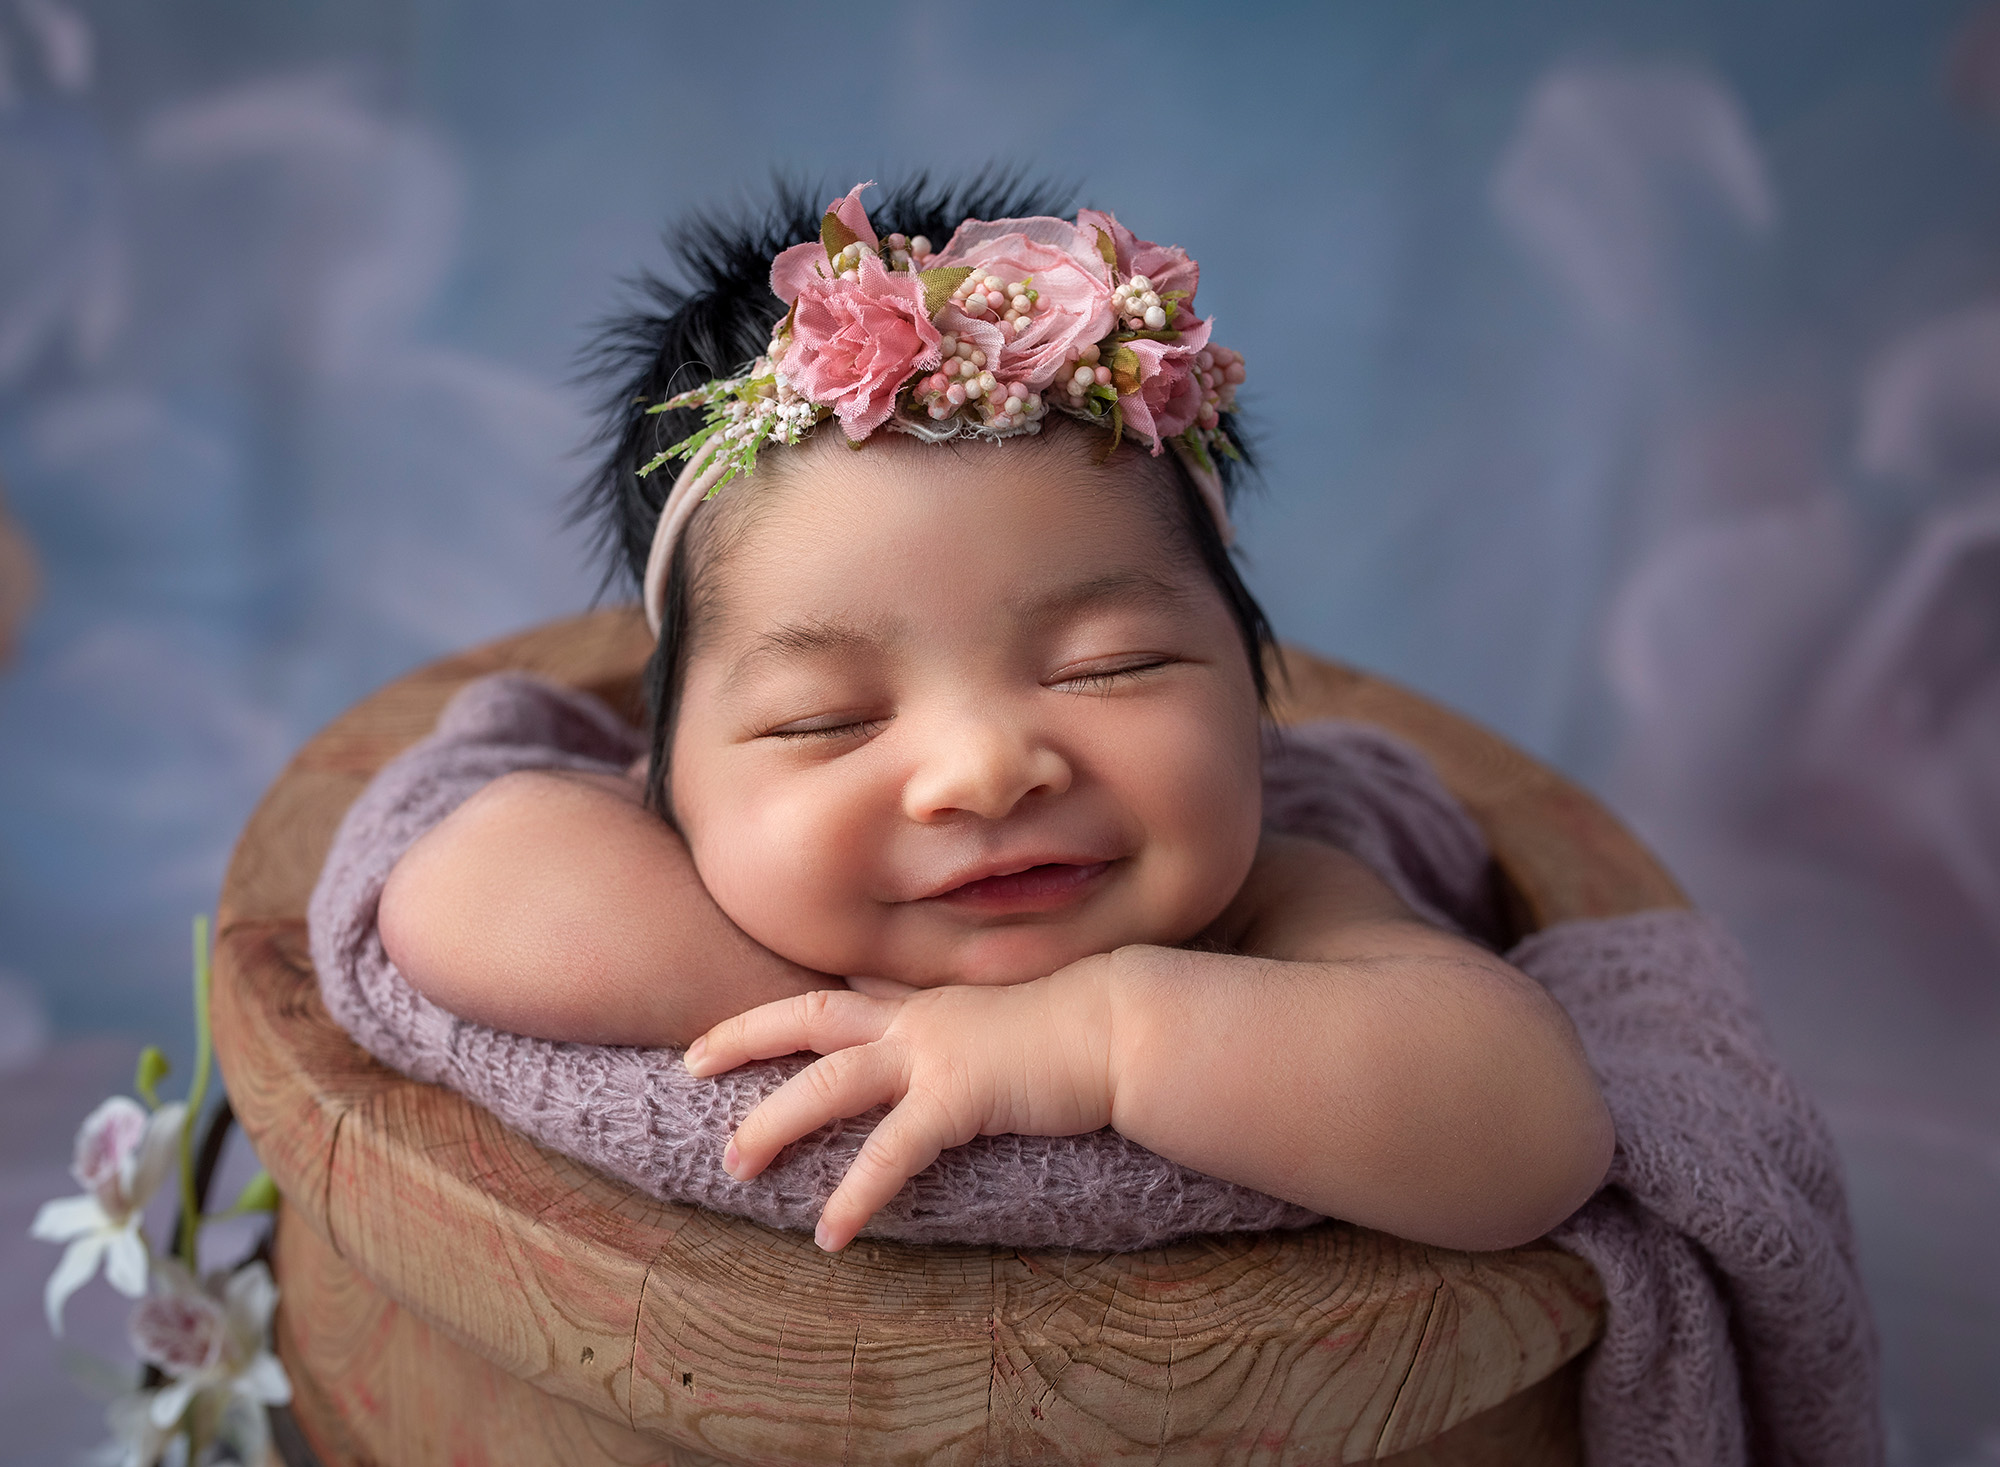 newborn baby girl happily smiling while asleep in honey pot wearing pink headband